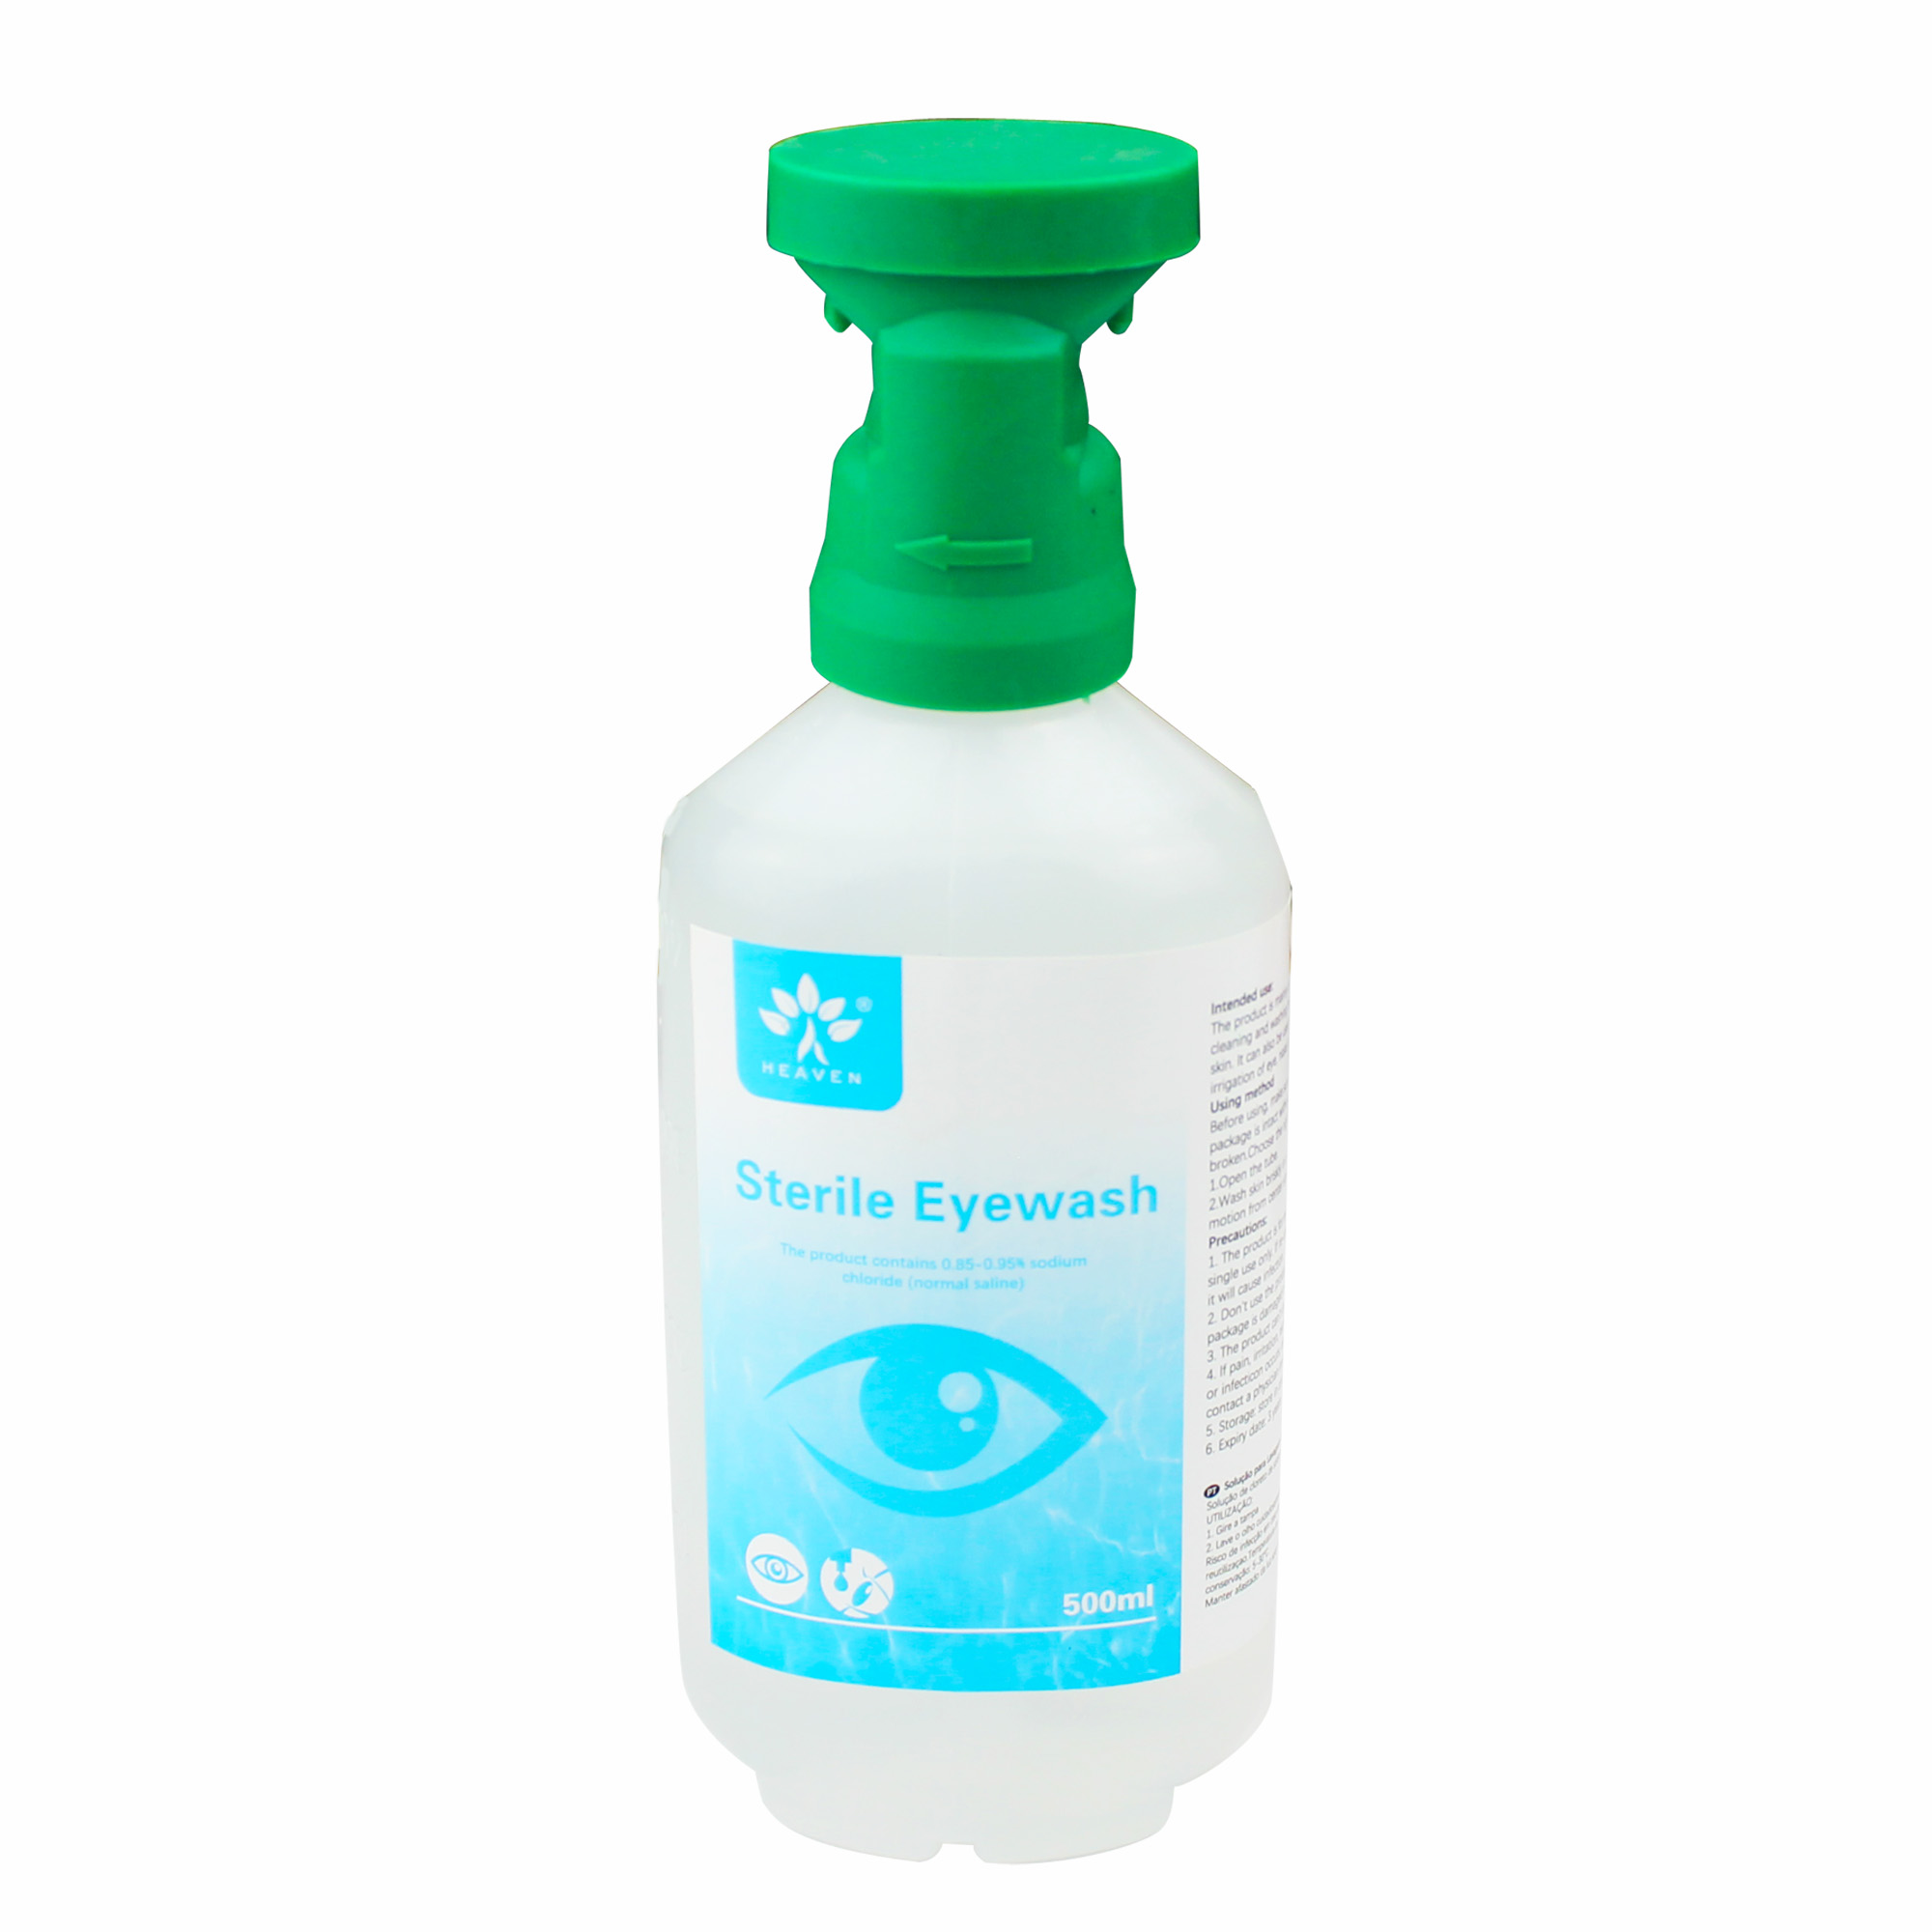 Sterile Eyewash